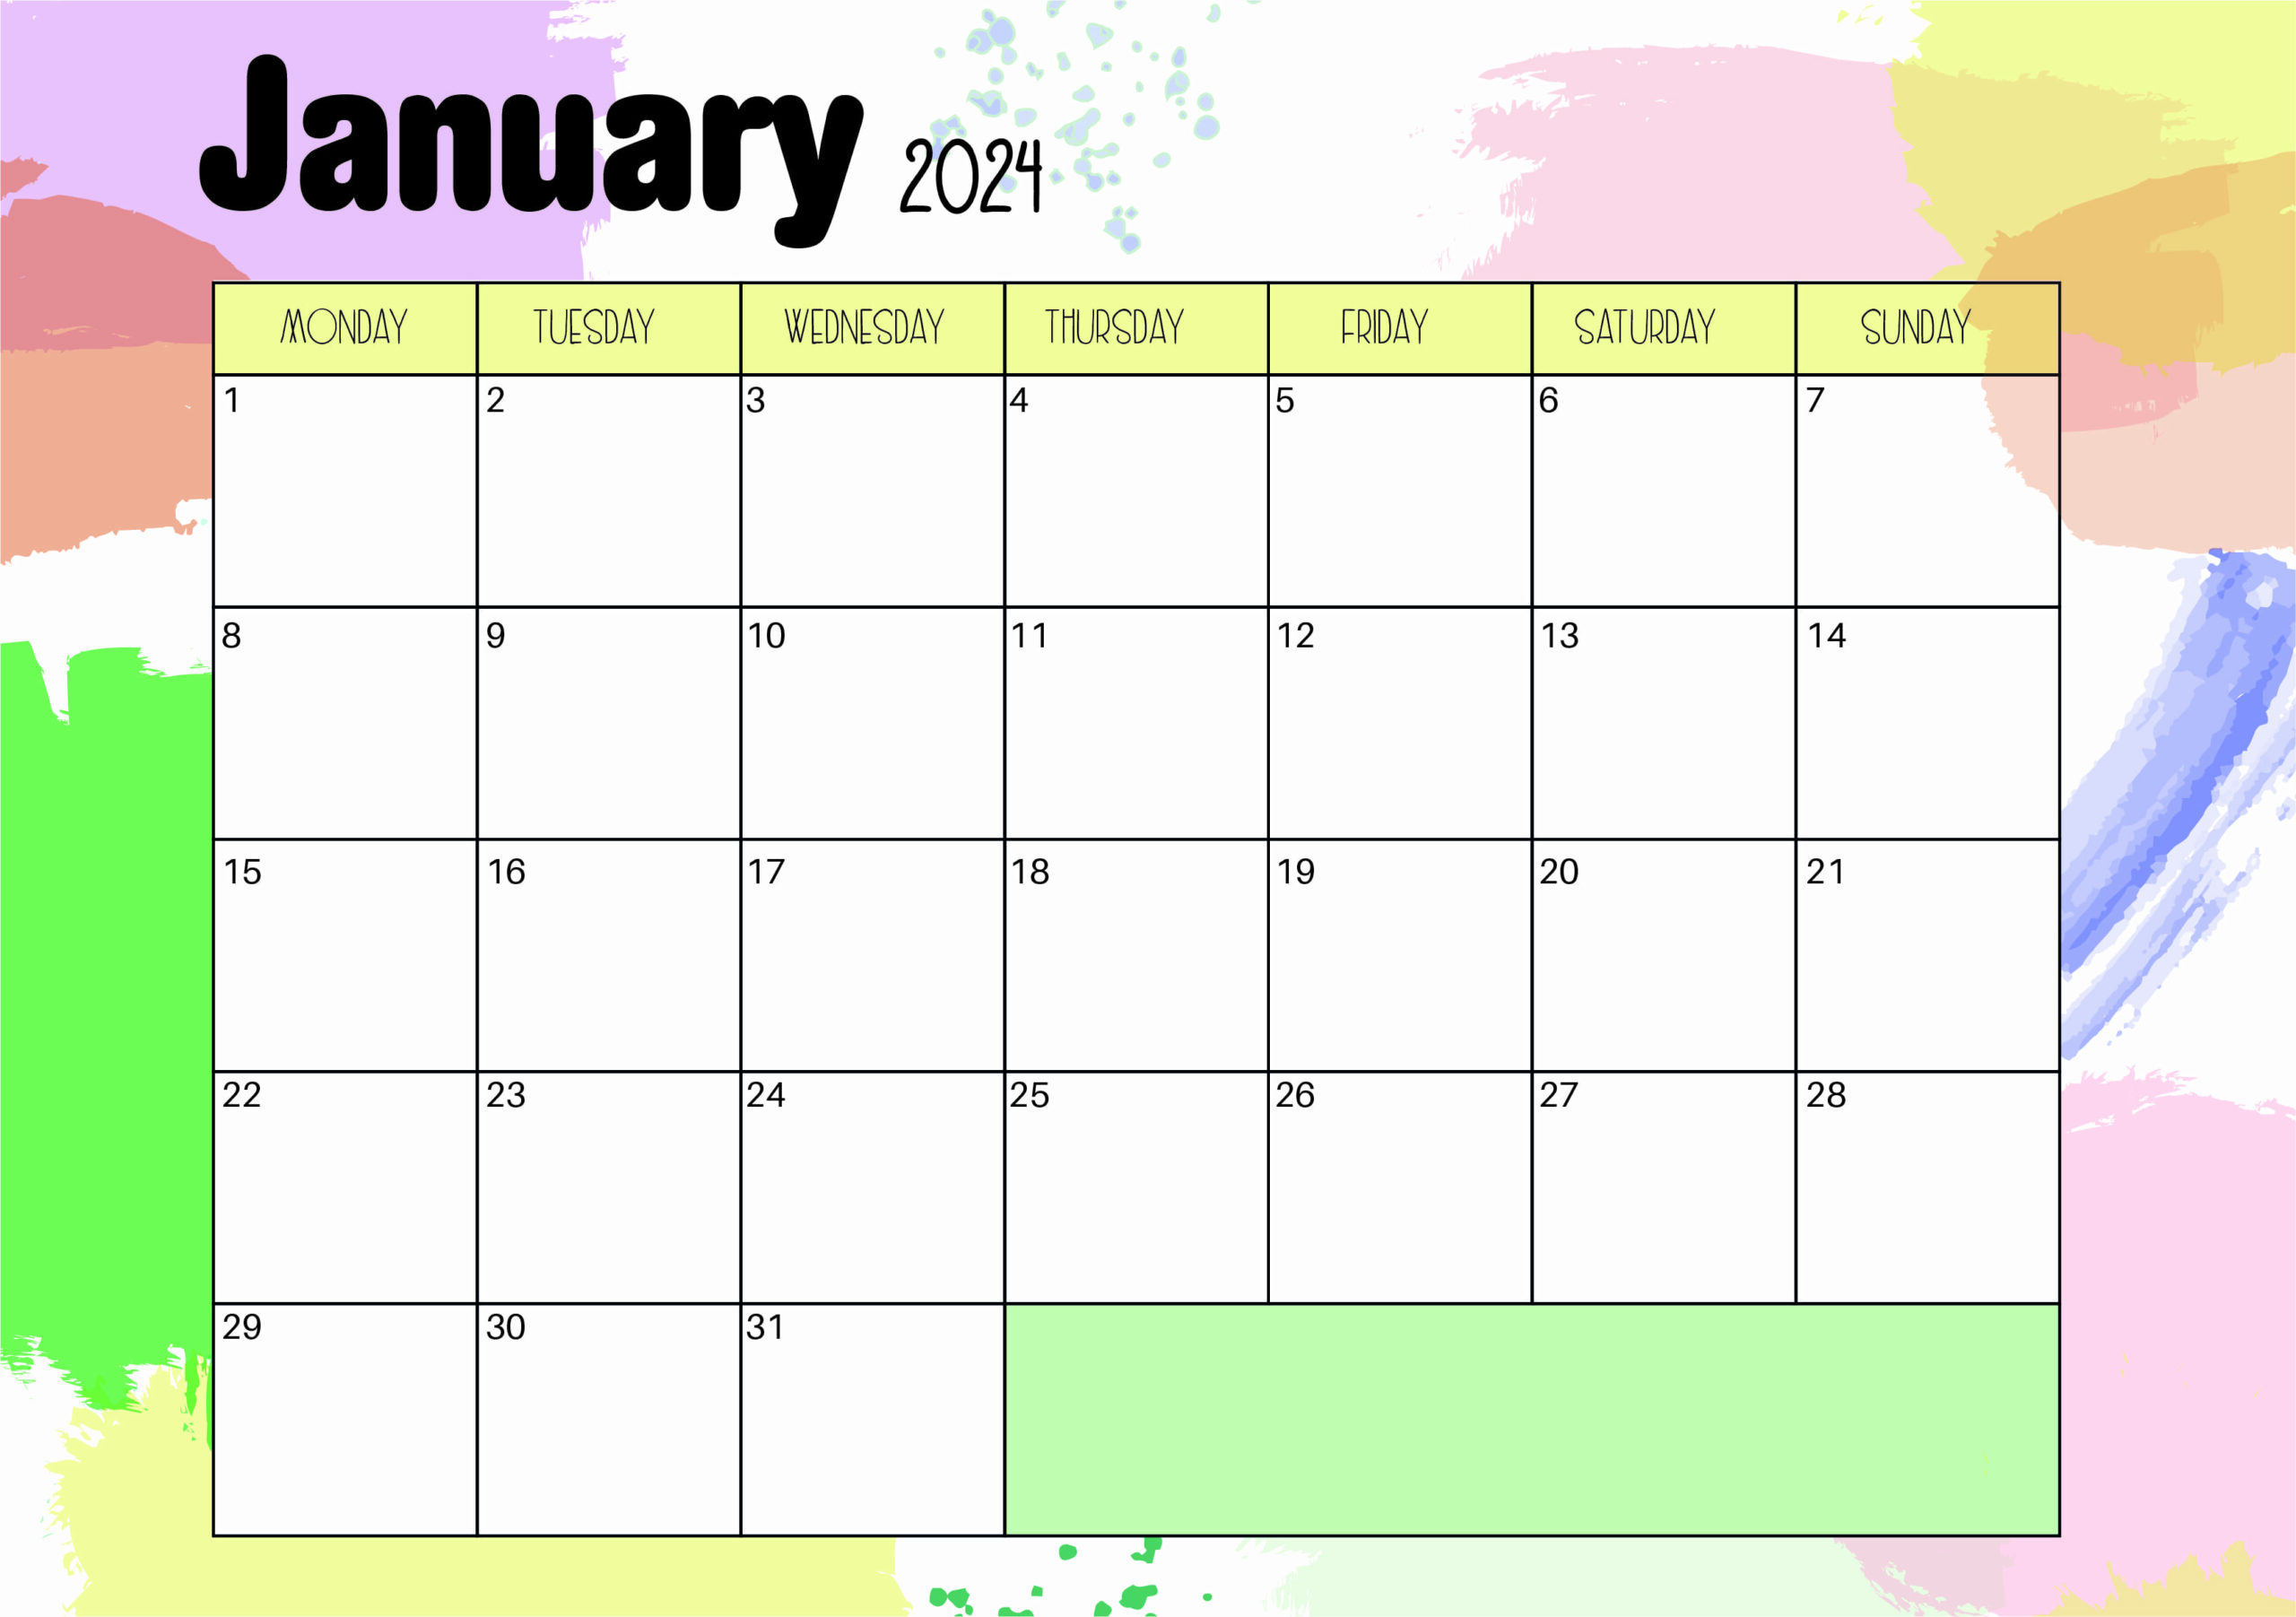 January 2024 calendar for printing 